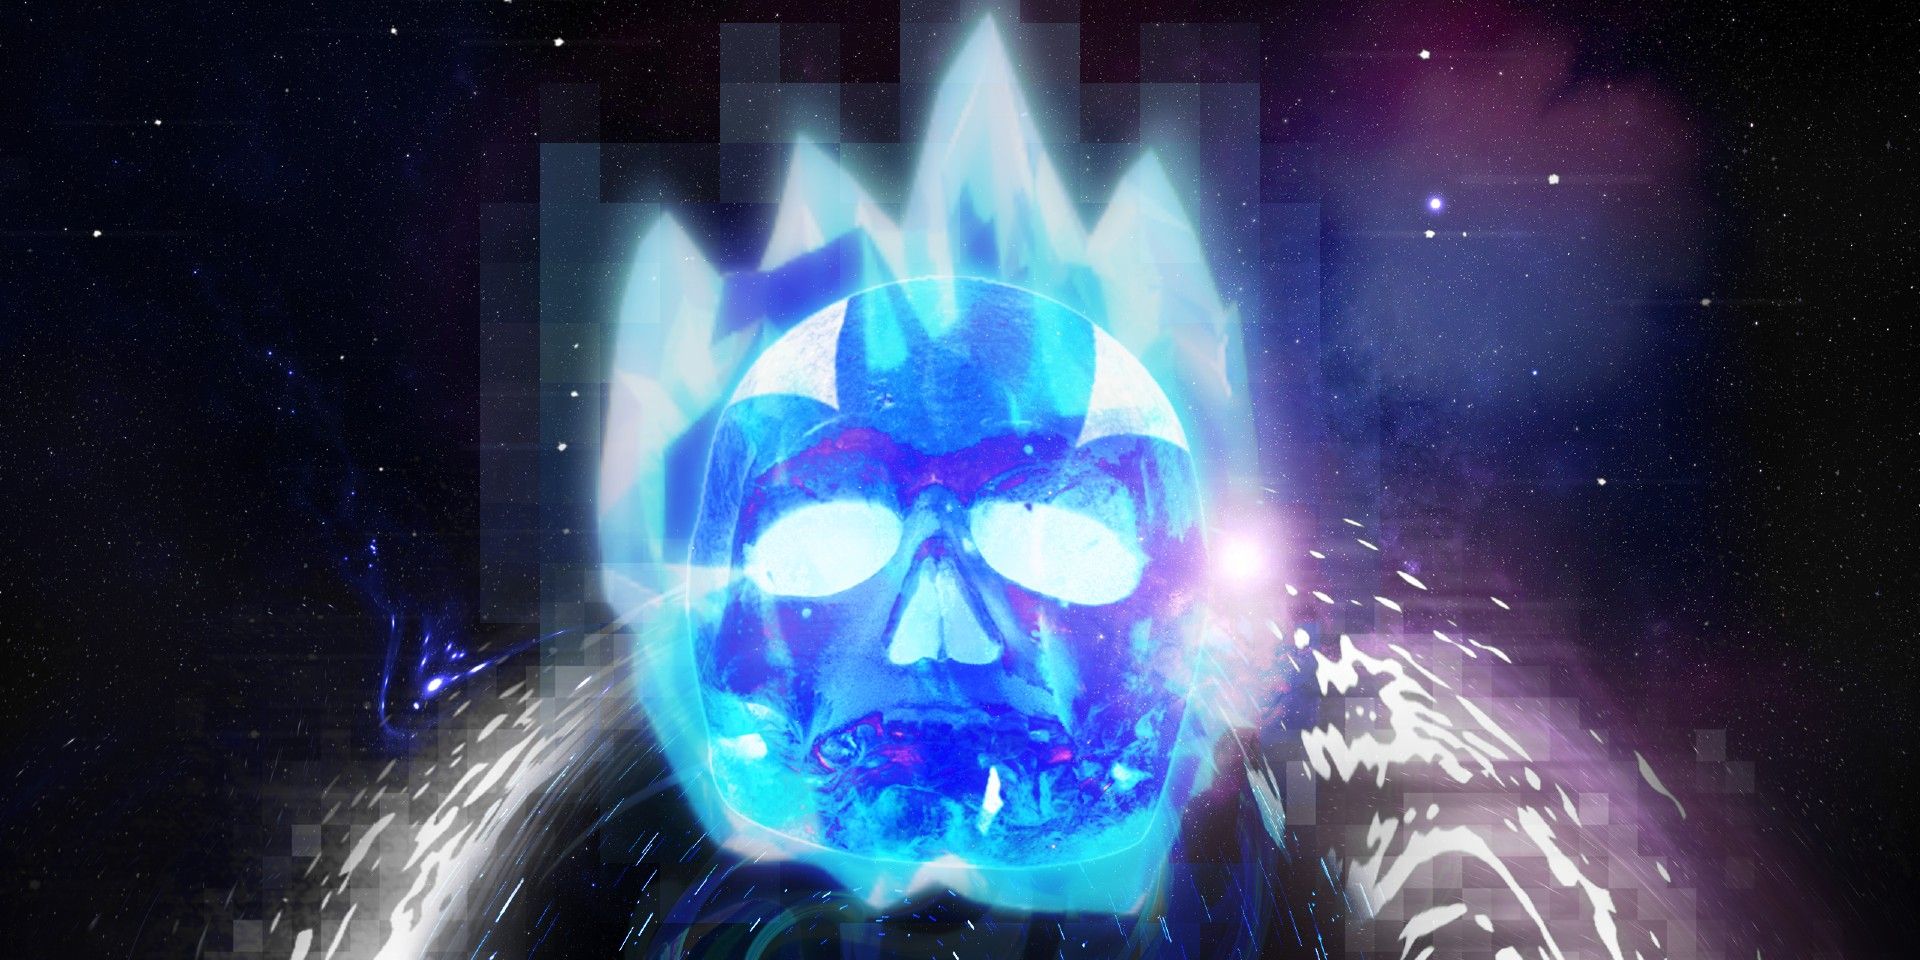 Blaseball PR image showing a flaming blue skull in space.